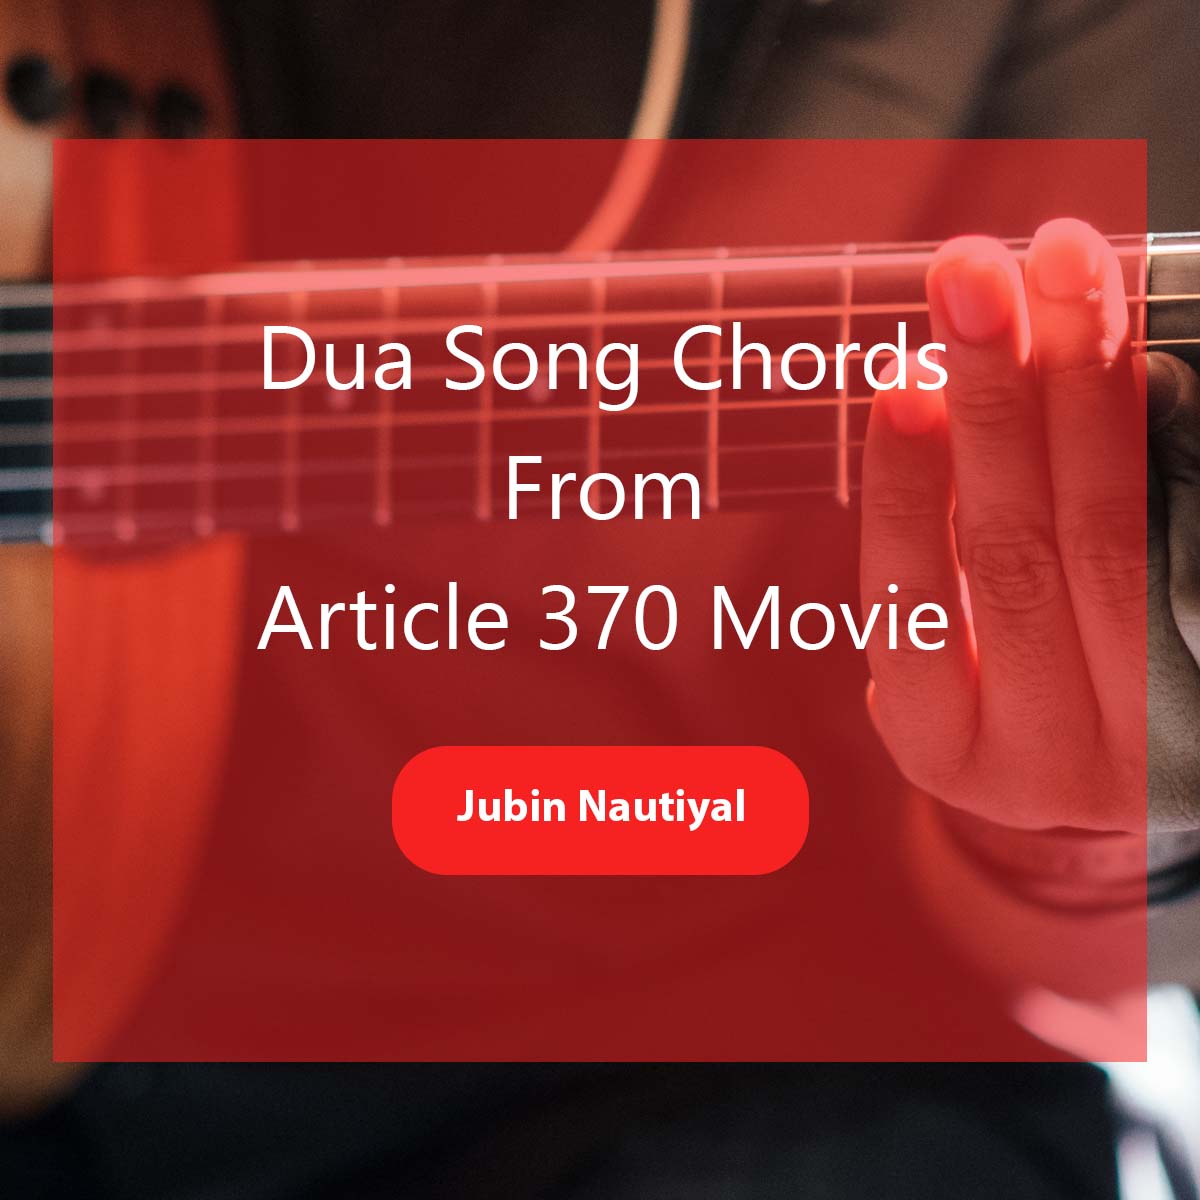 Dua Song Chords sung by Jubin Nautiyal featuring Yami Gautam from Article 370 Movie